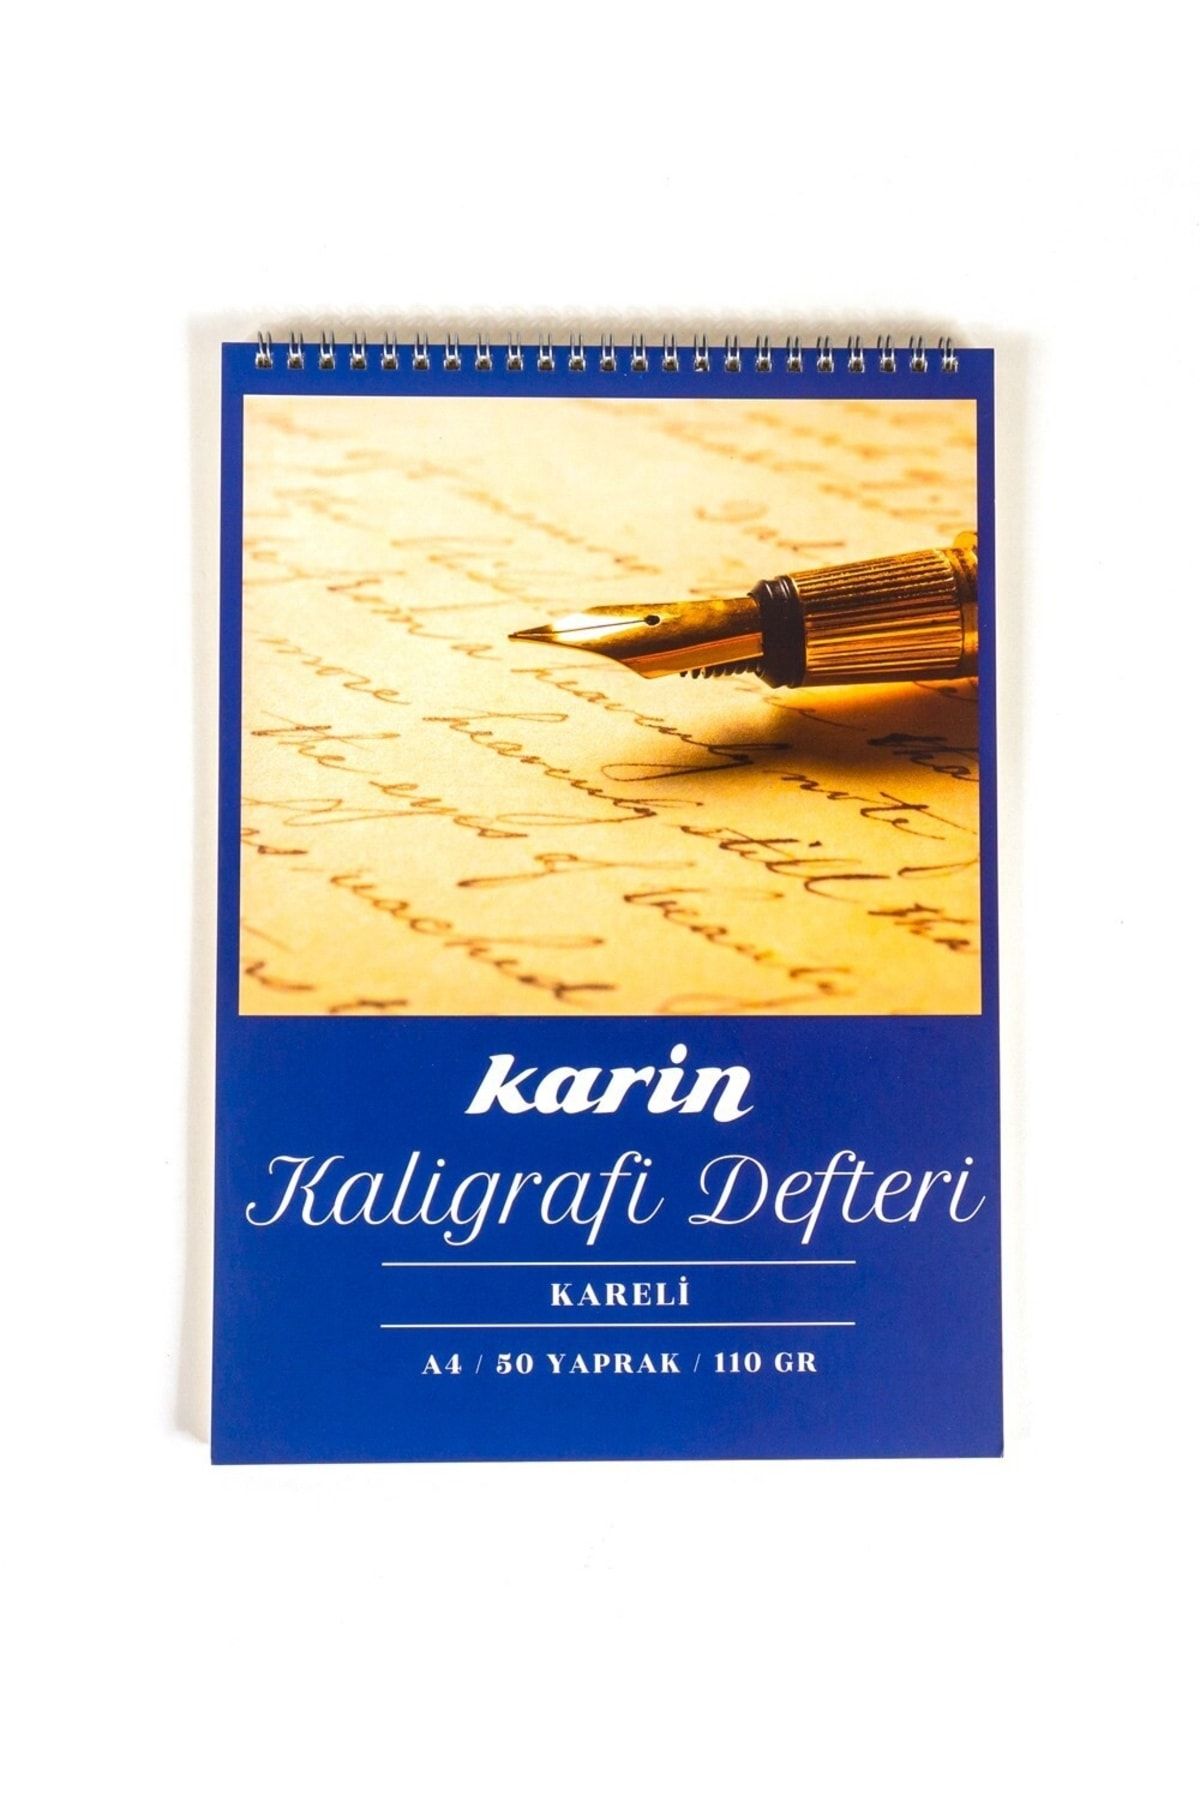 Karin : Kareli Kaligrafi Defteri : A4 : 50 Yaprak